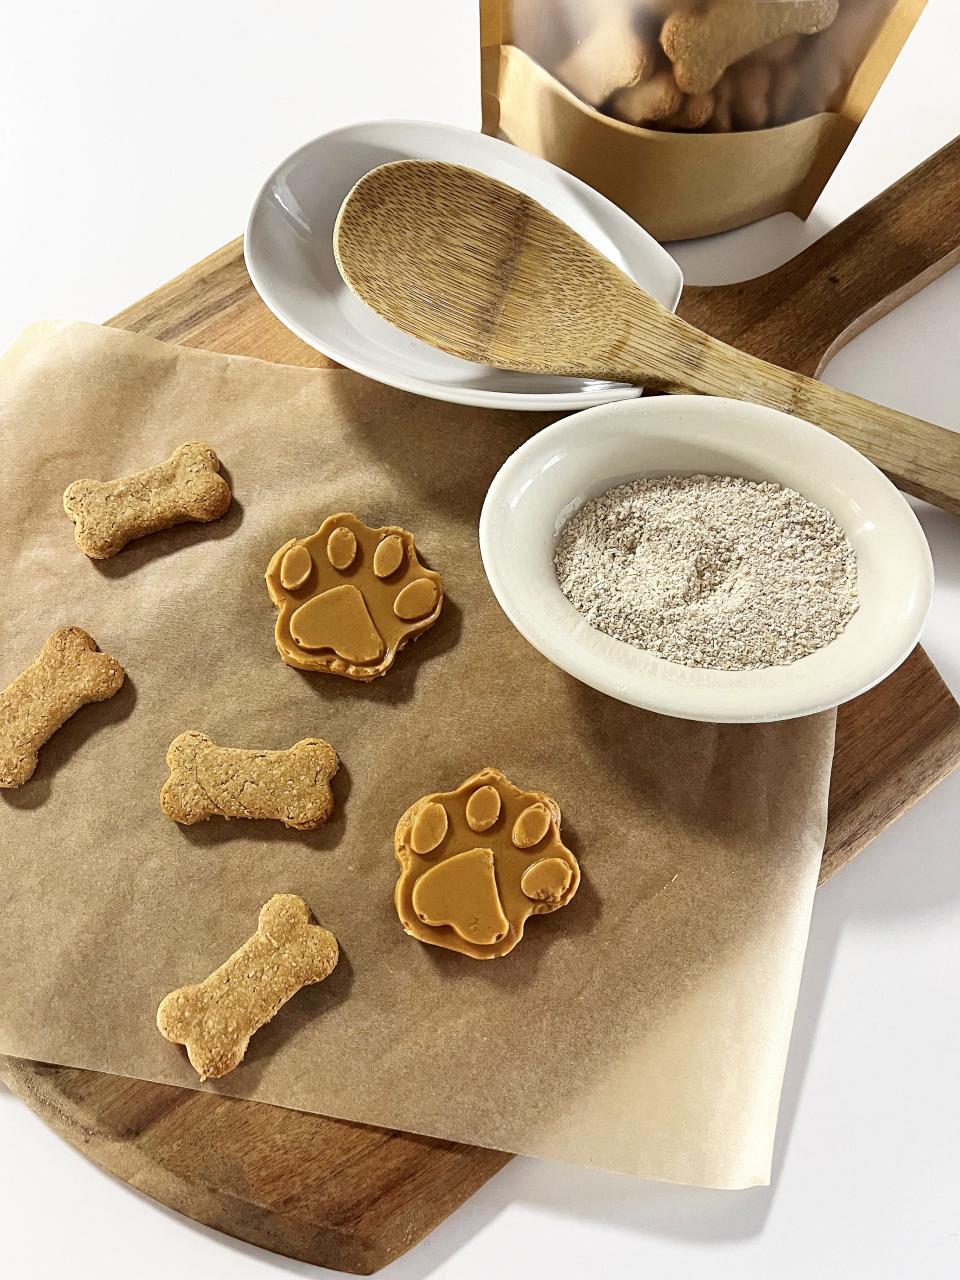 Peanut butter Pupcakery dog treats.